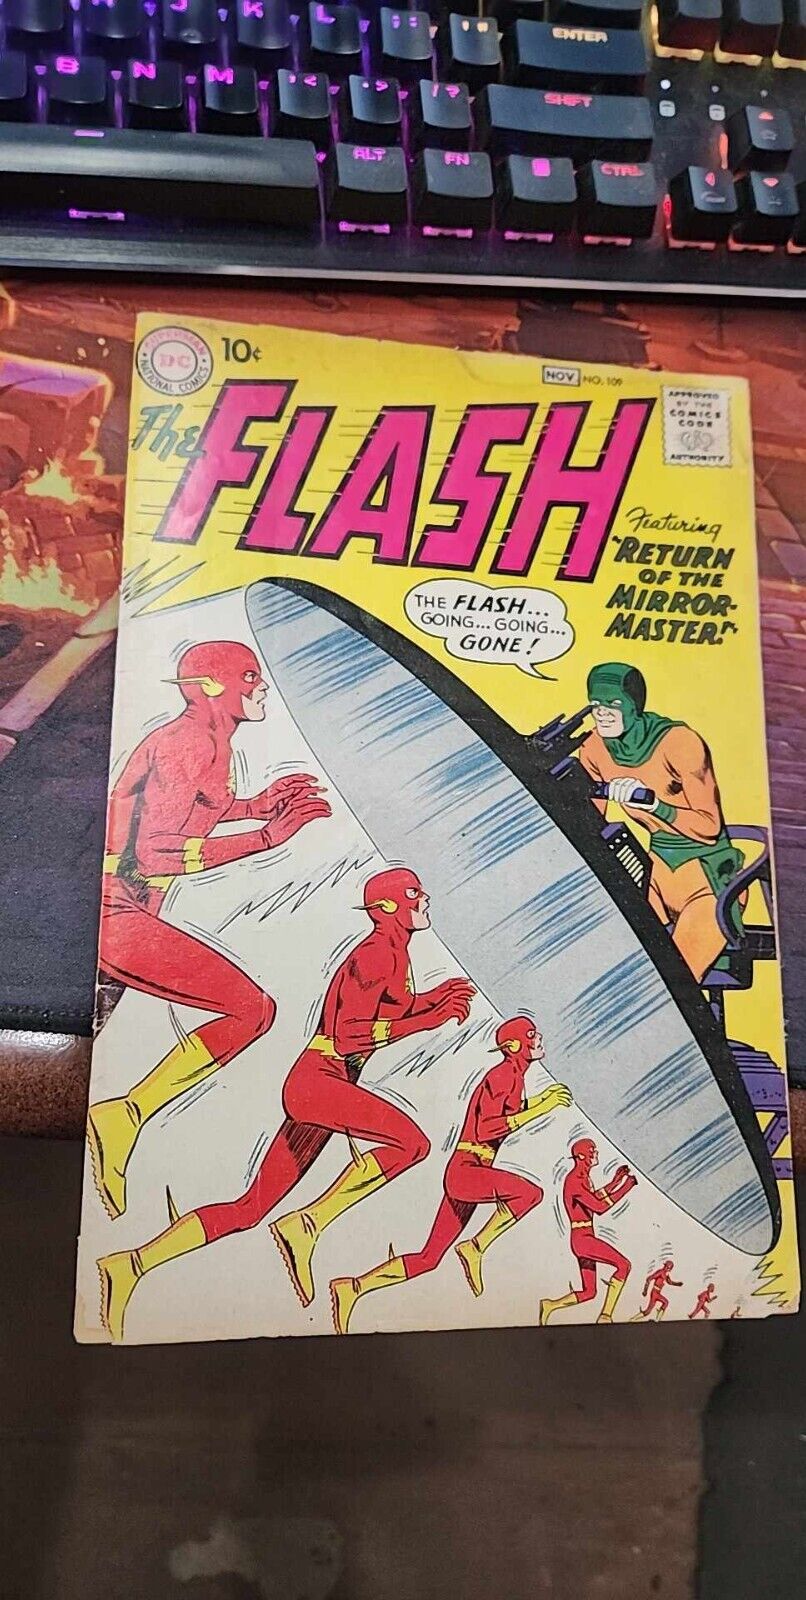 DC Comics: Flash #109 2nd Mirror Master